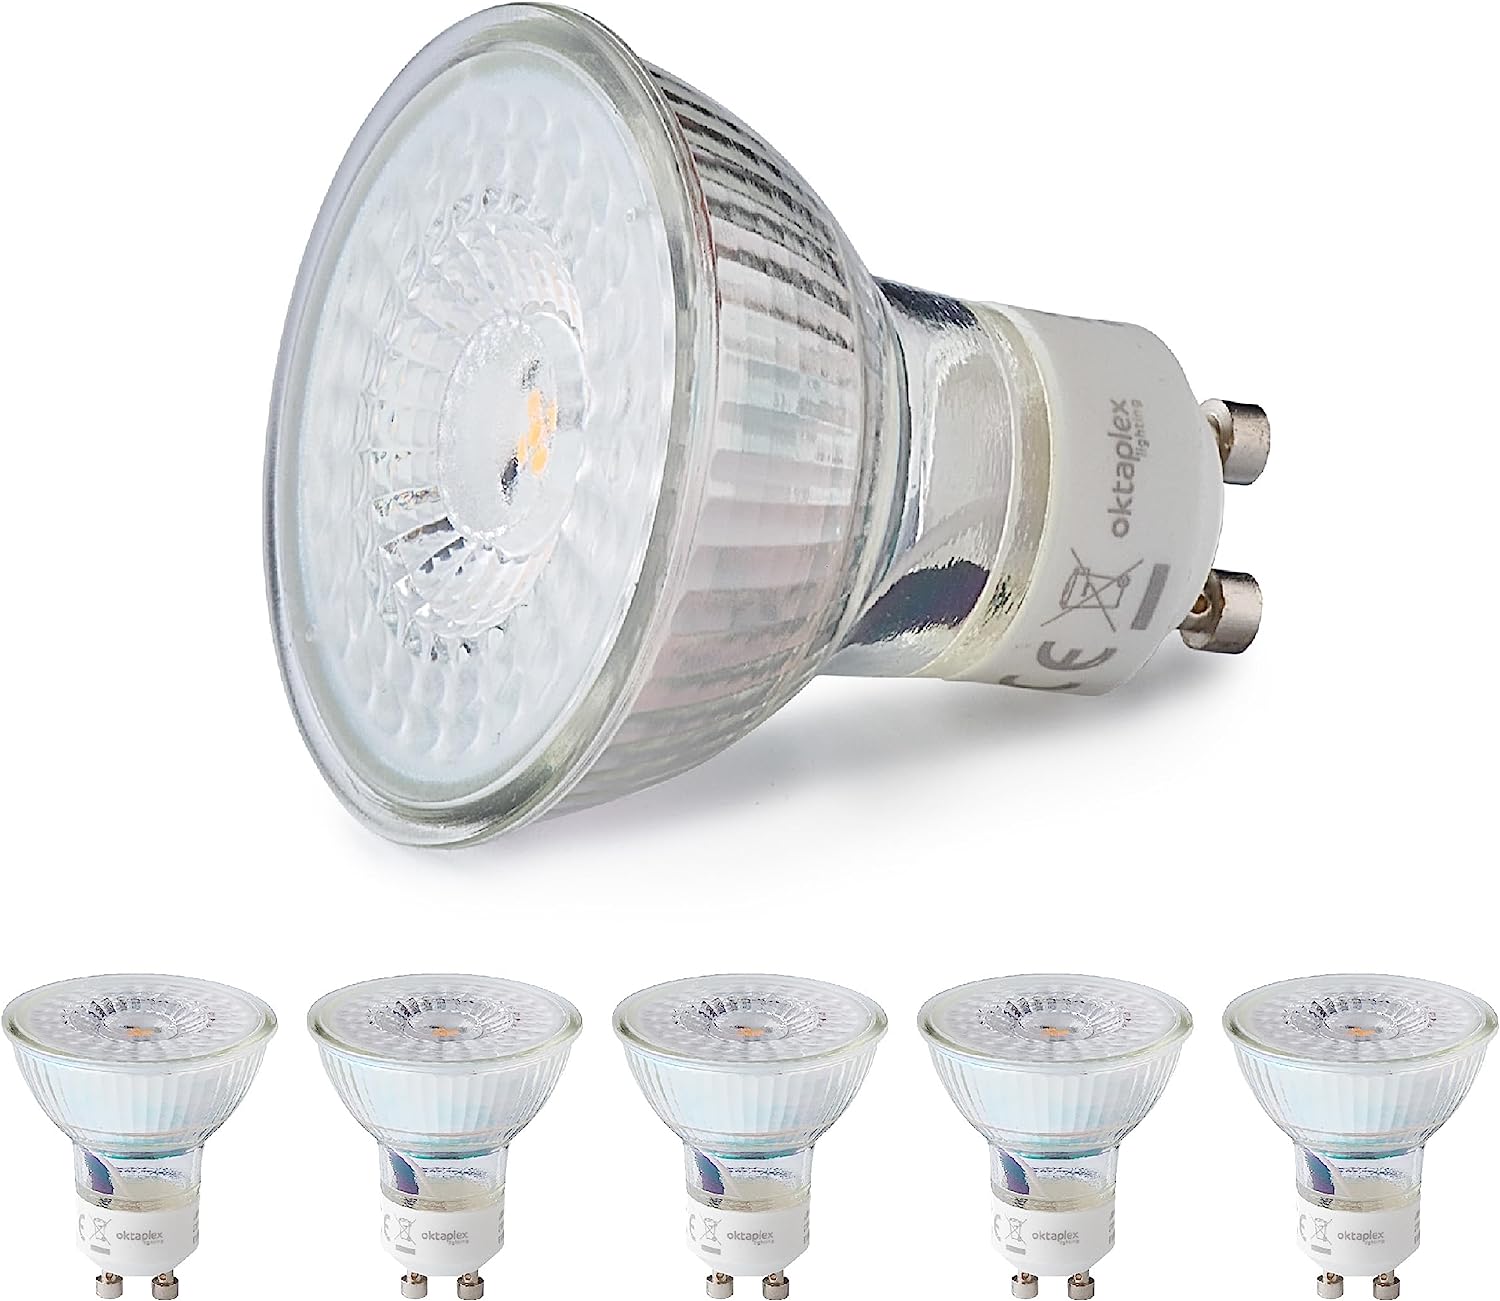 6 Stück Oktaplex Lux LED Leuchtmittel GU10